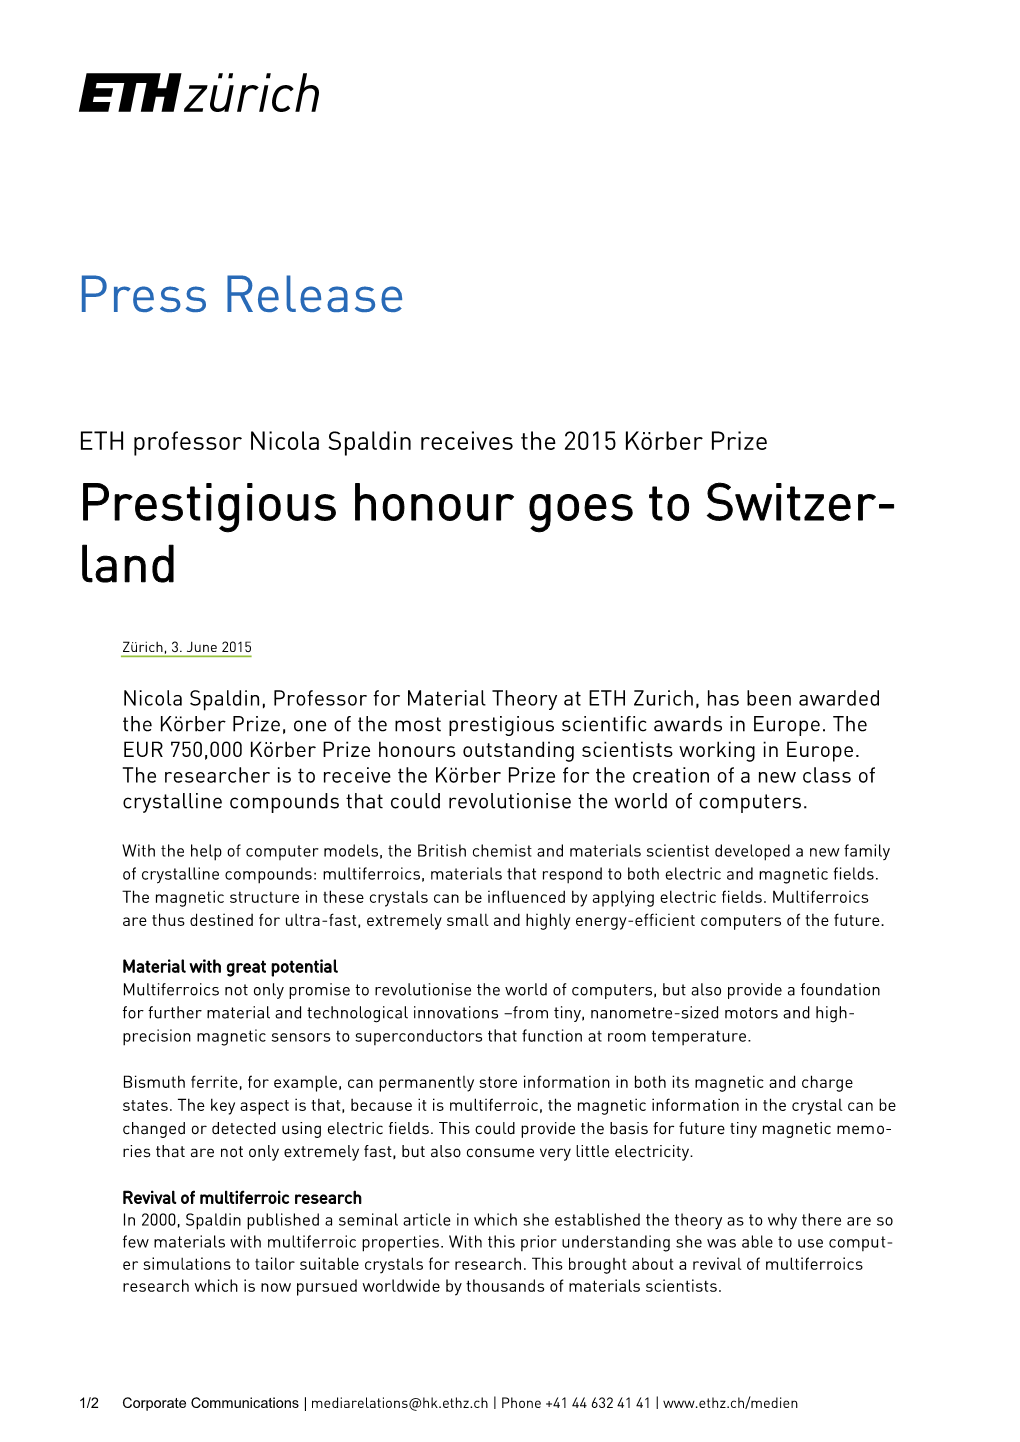 Press Release Prestigious Honour Goes to Switzer- Land